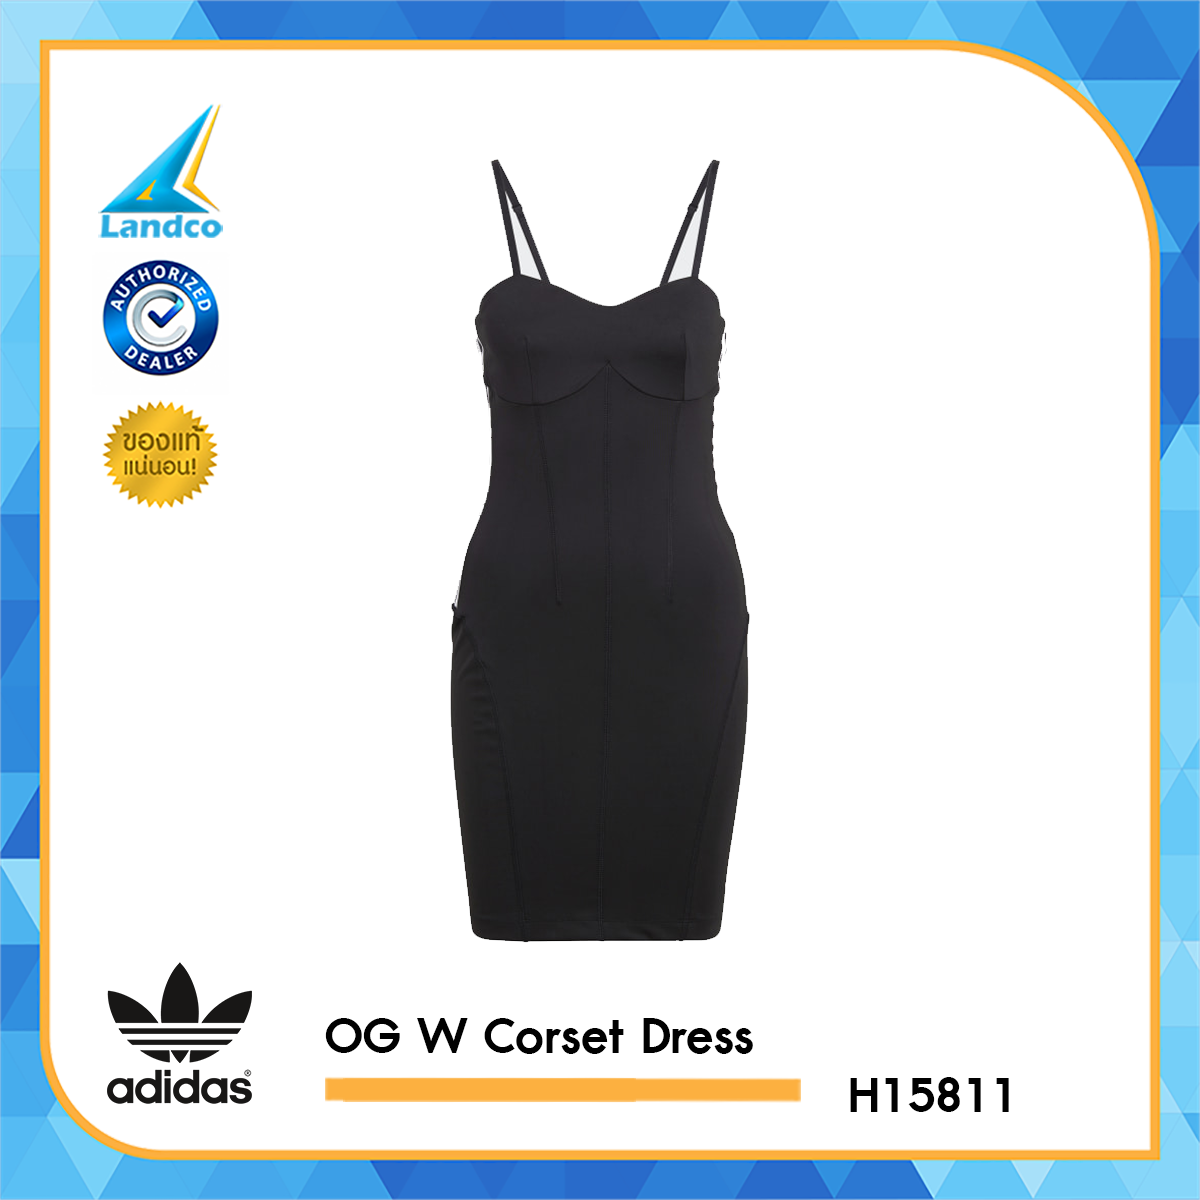 adidas Women's Corset Dress Black H15811